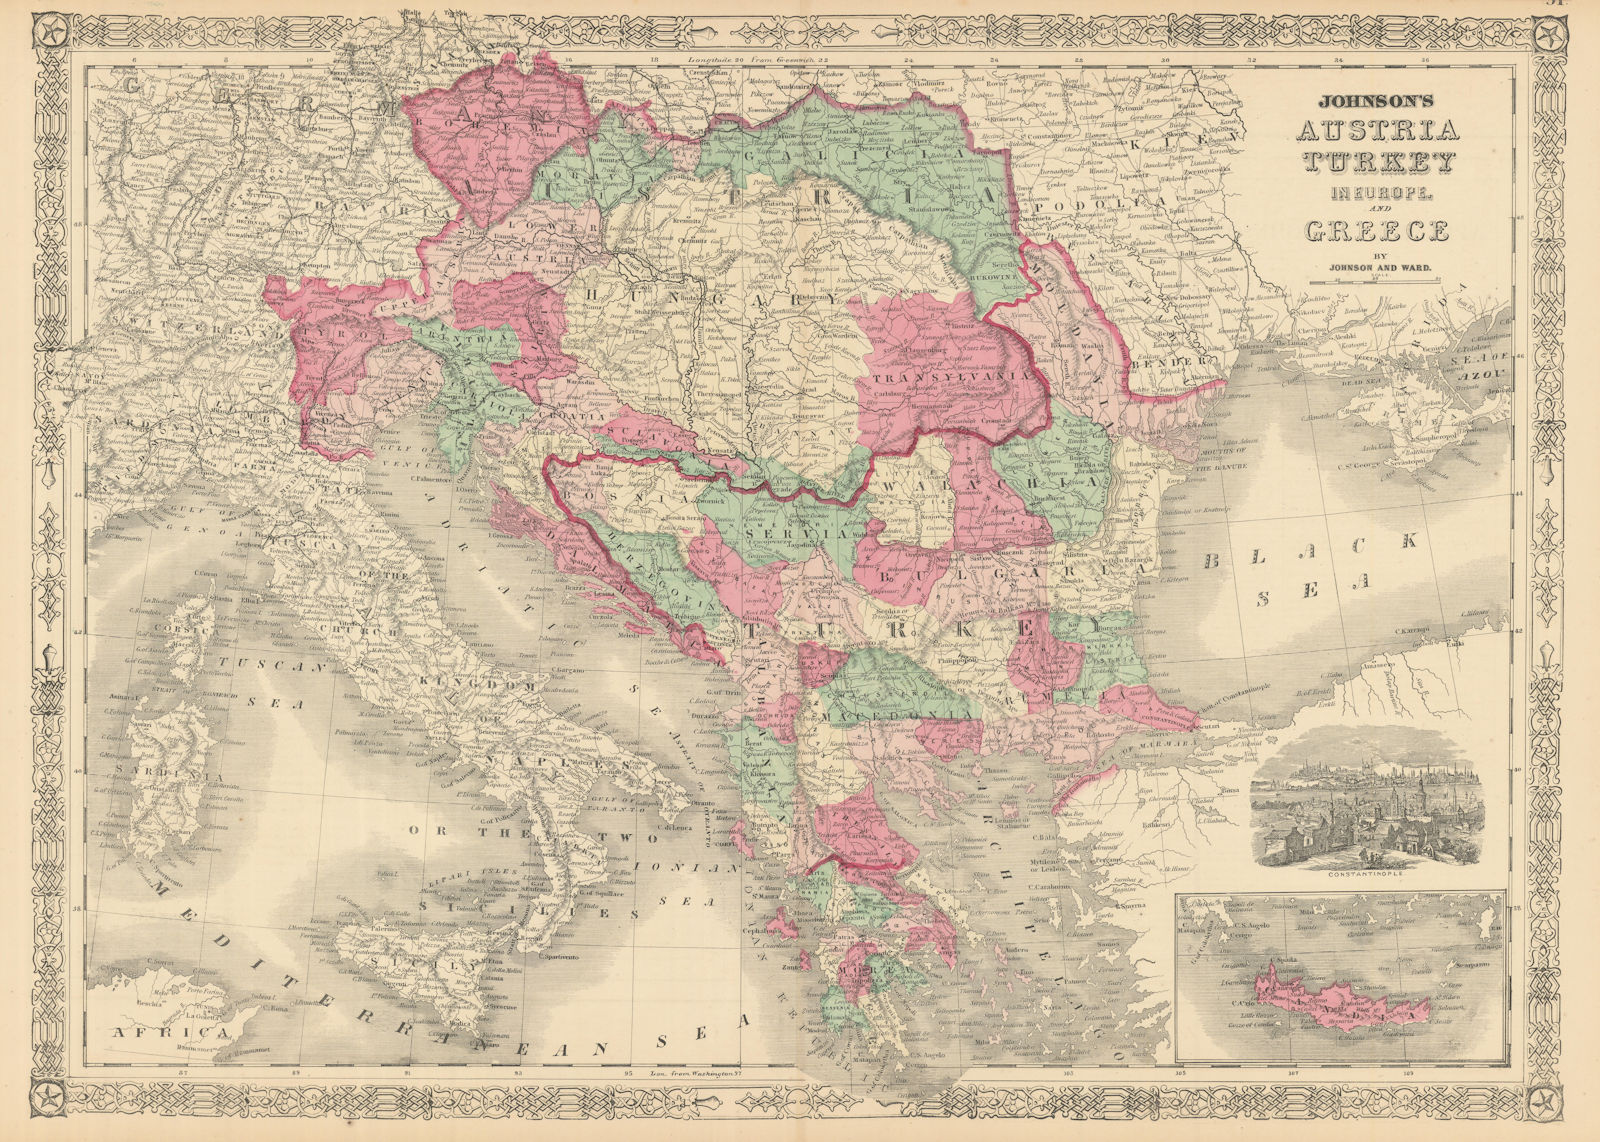 Johnson's Austria, Turkey in Europe and Greece. Balkans Venice 1866 old map